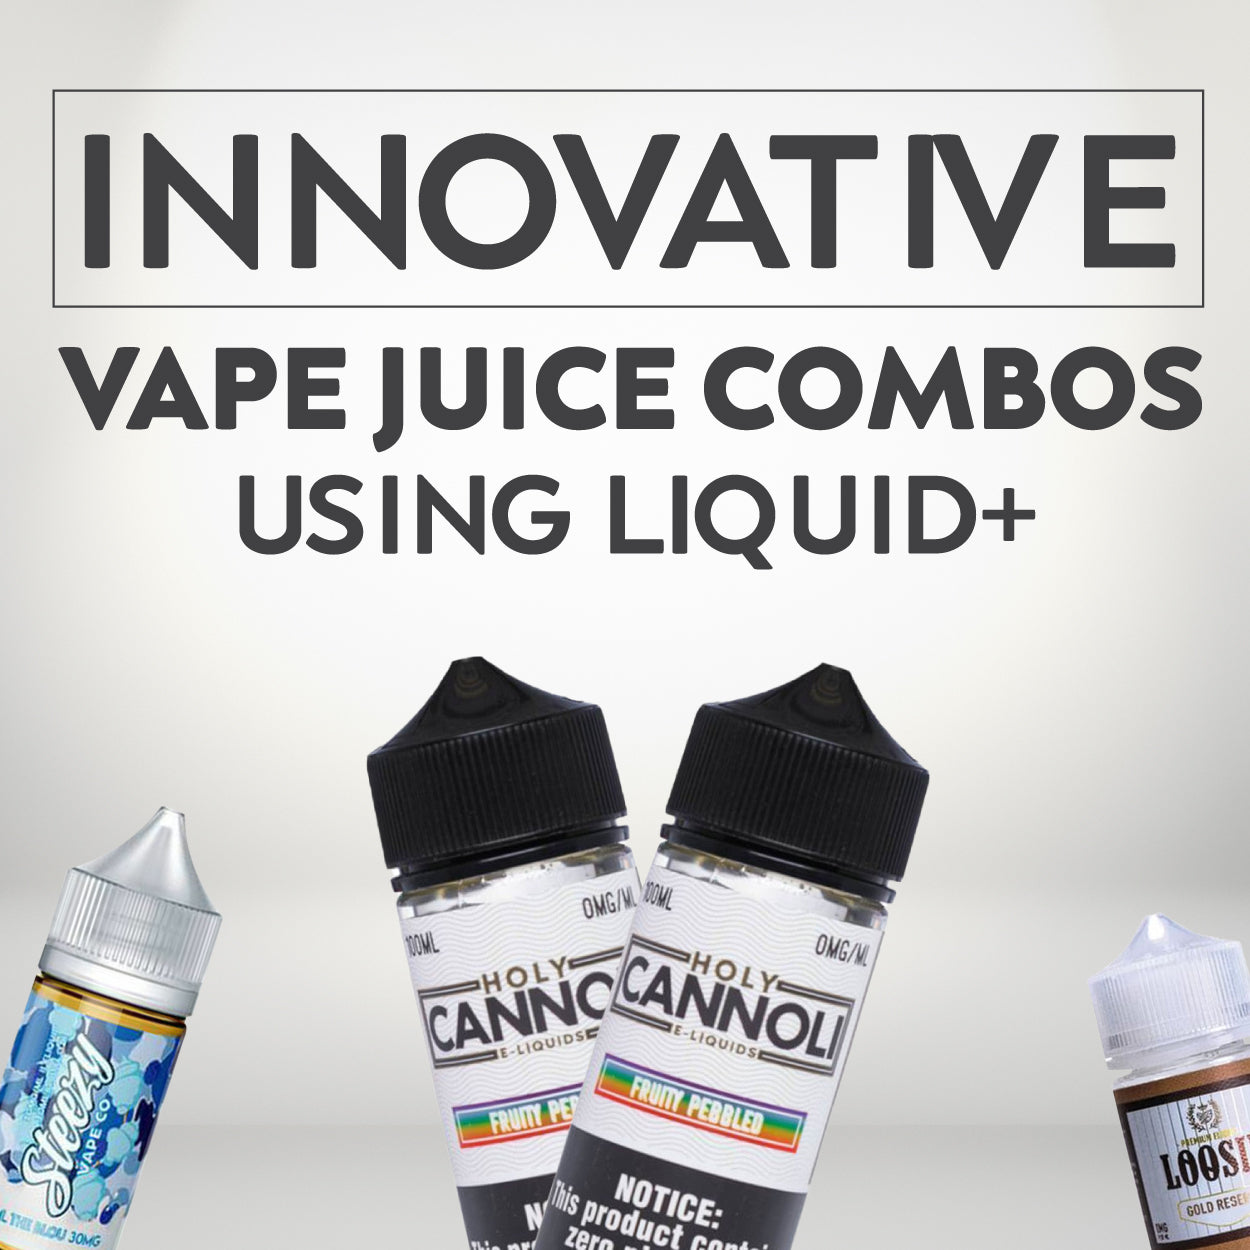 Innovative Vape Juice Combos Using Liquid+